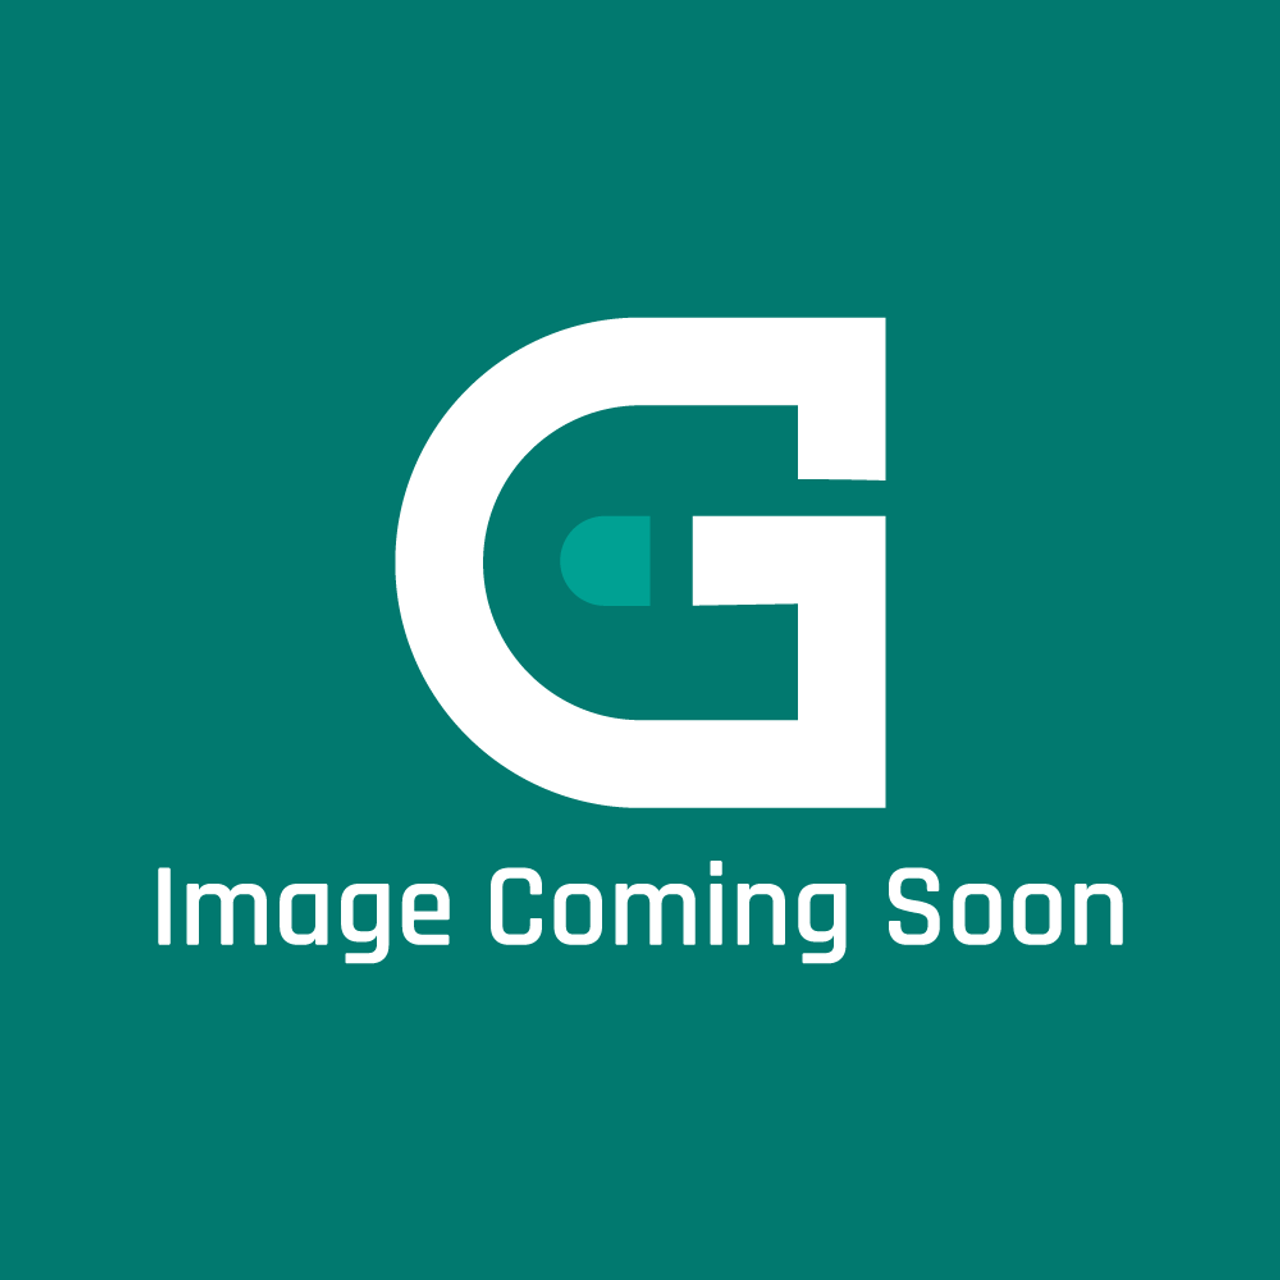 GE Appliances WR12X28145 - FRIDGE DOOR HANDLE FF BLACK STAINLESS - Image Coming Soon!